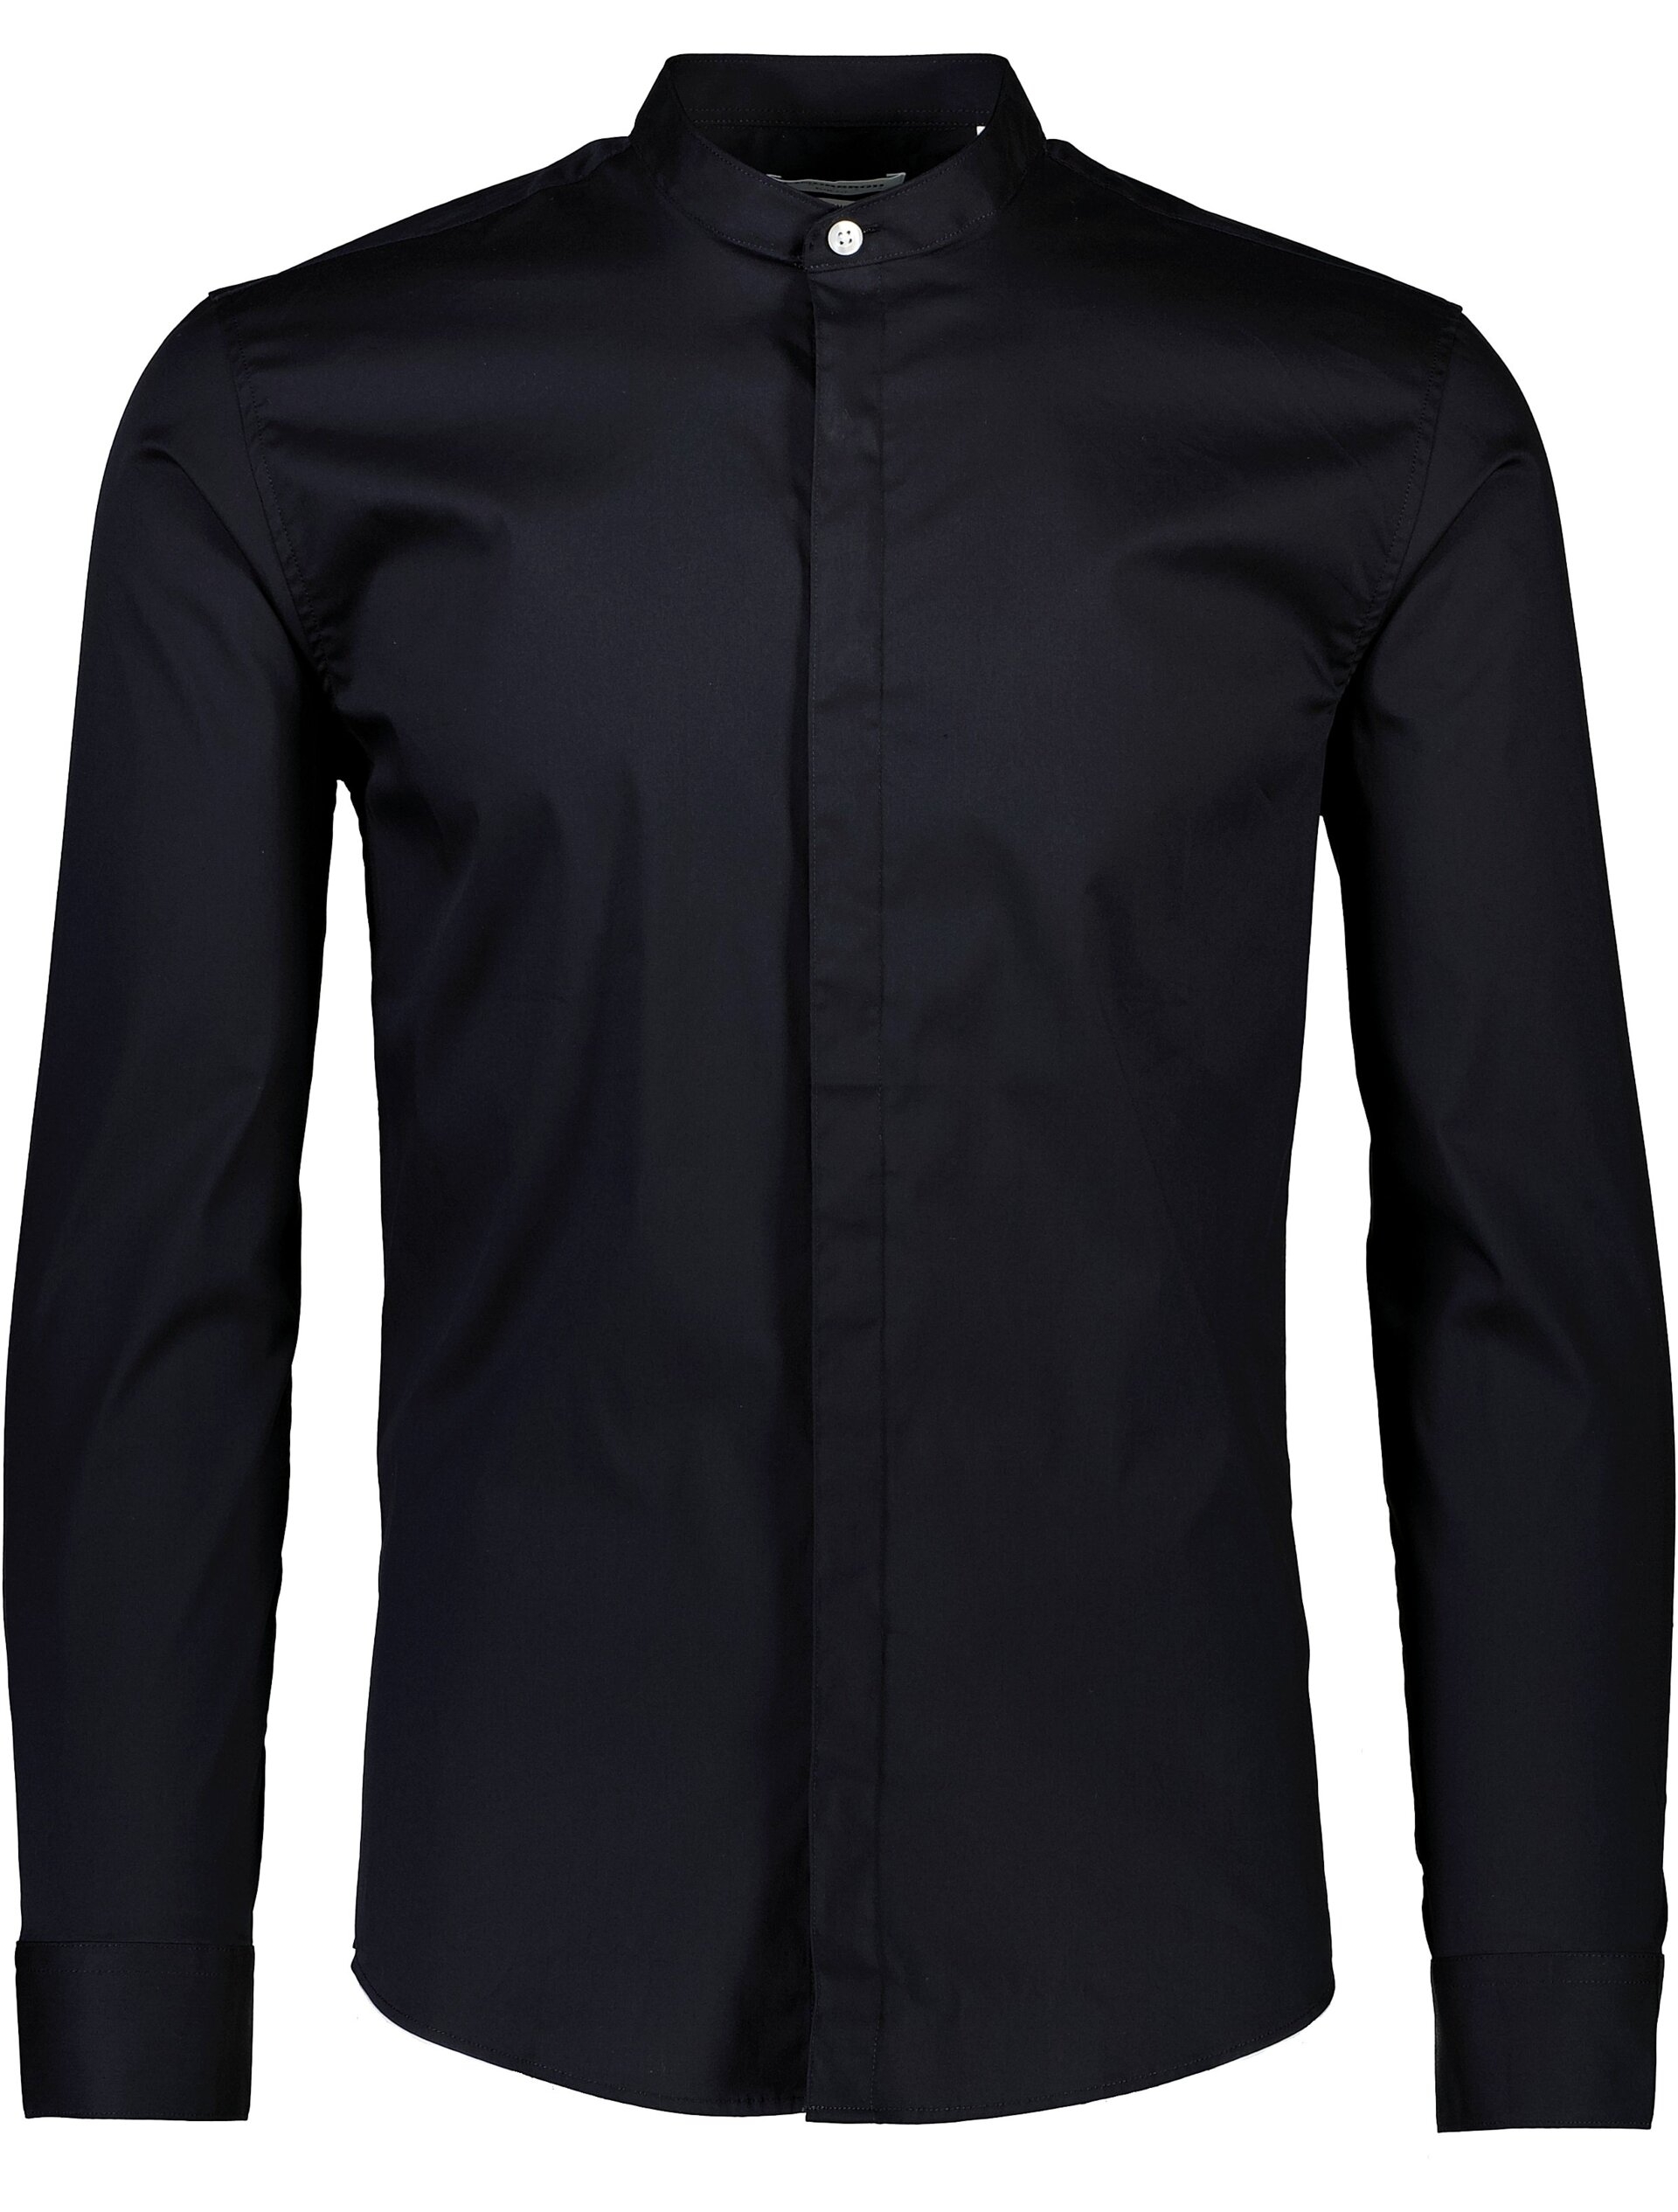 Lindbergh Business casual shirt black / black